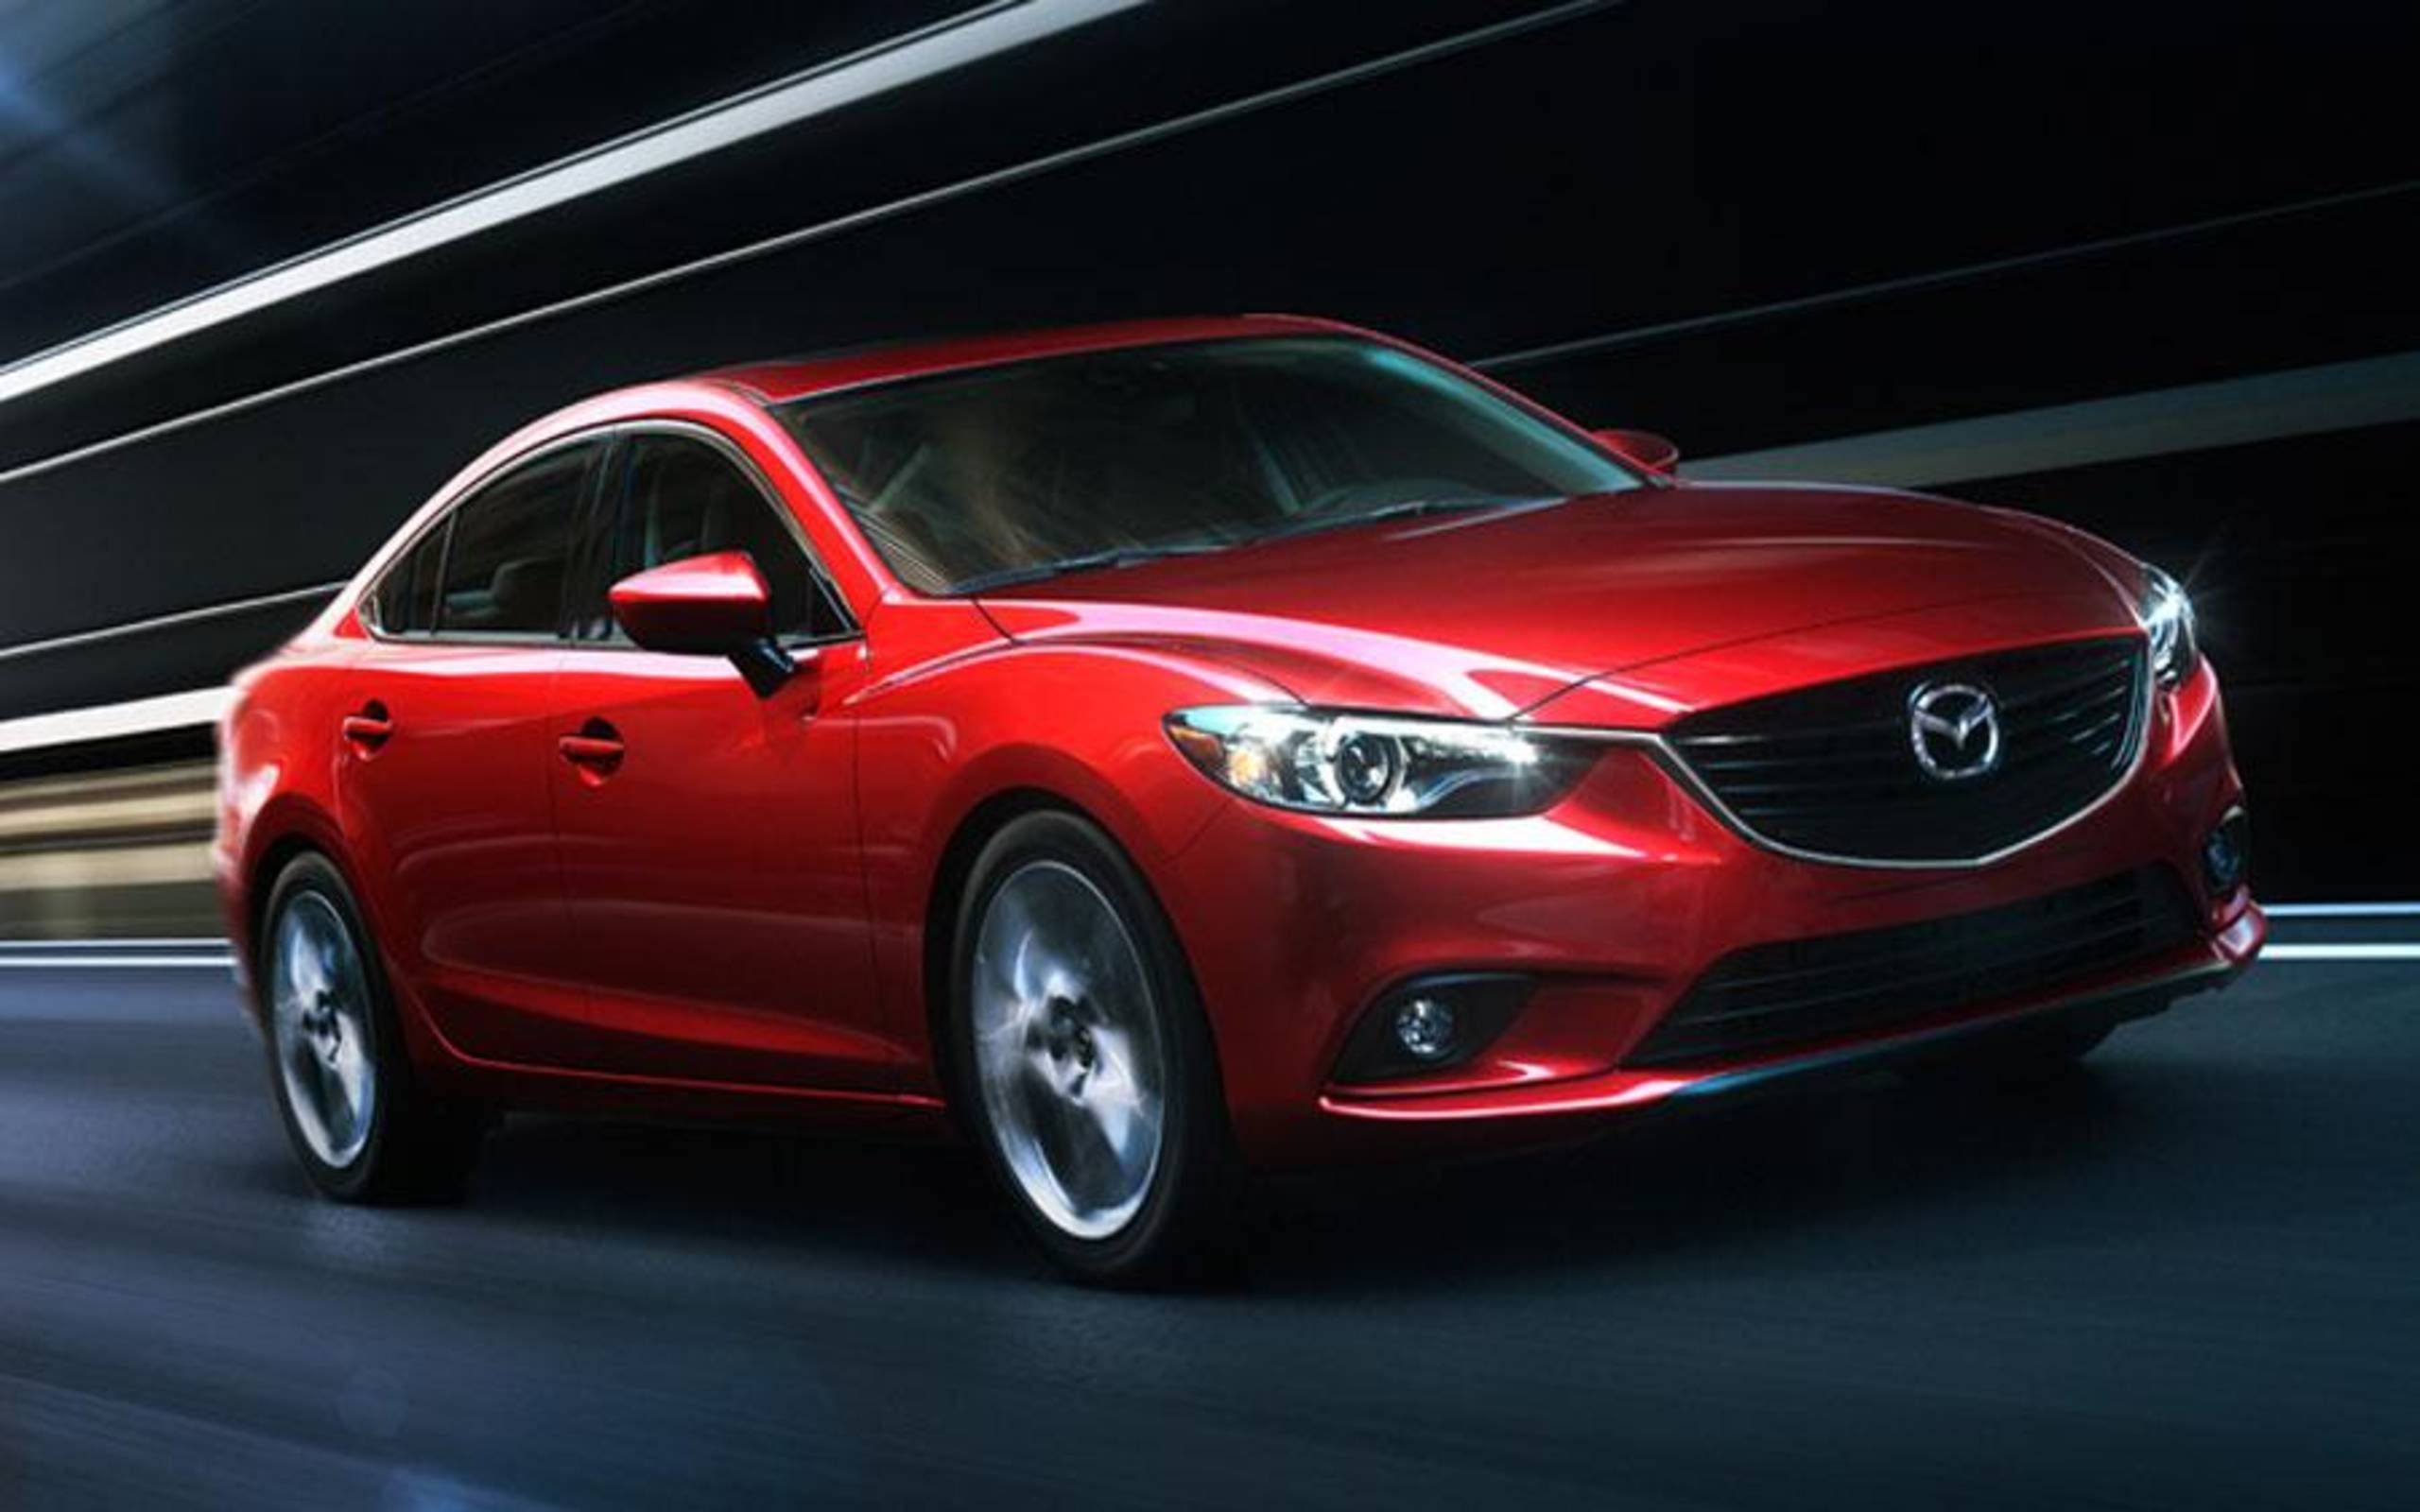 2014 Mazda 6 i Touring review notes